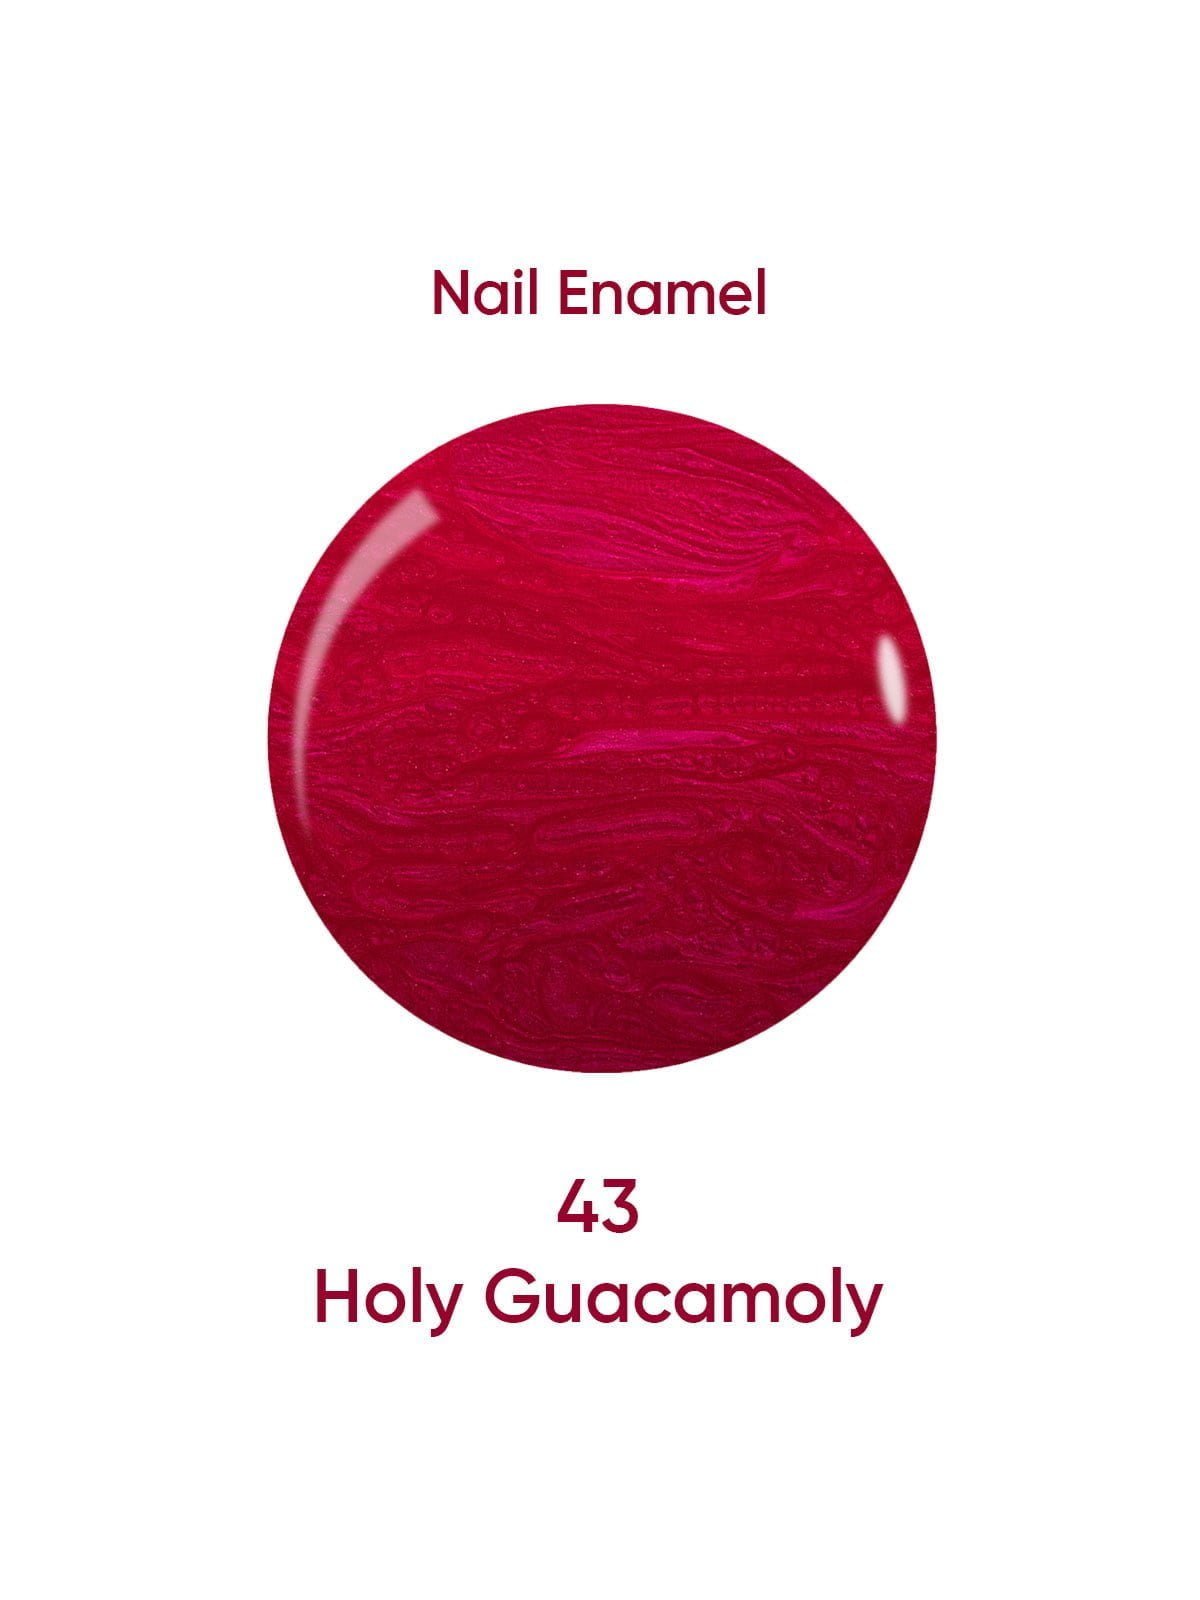 Nail Enamel 43 Holy Guacamoly